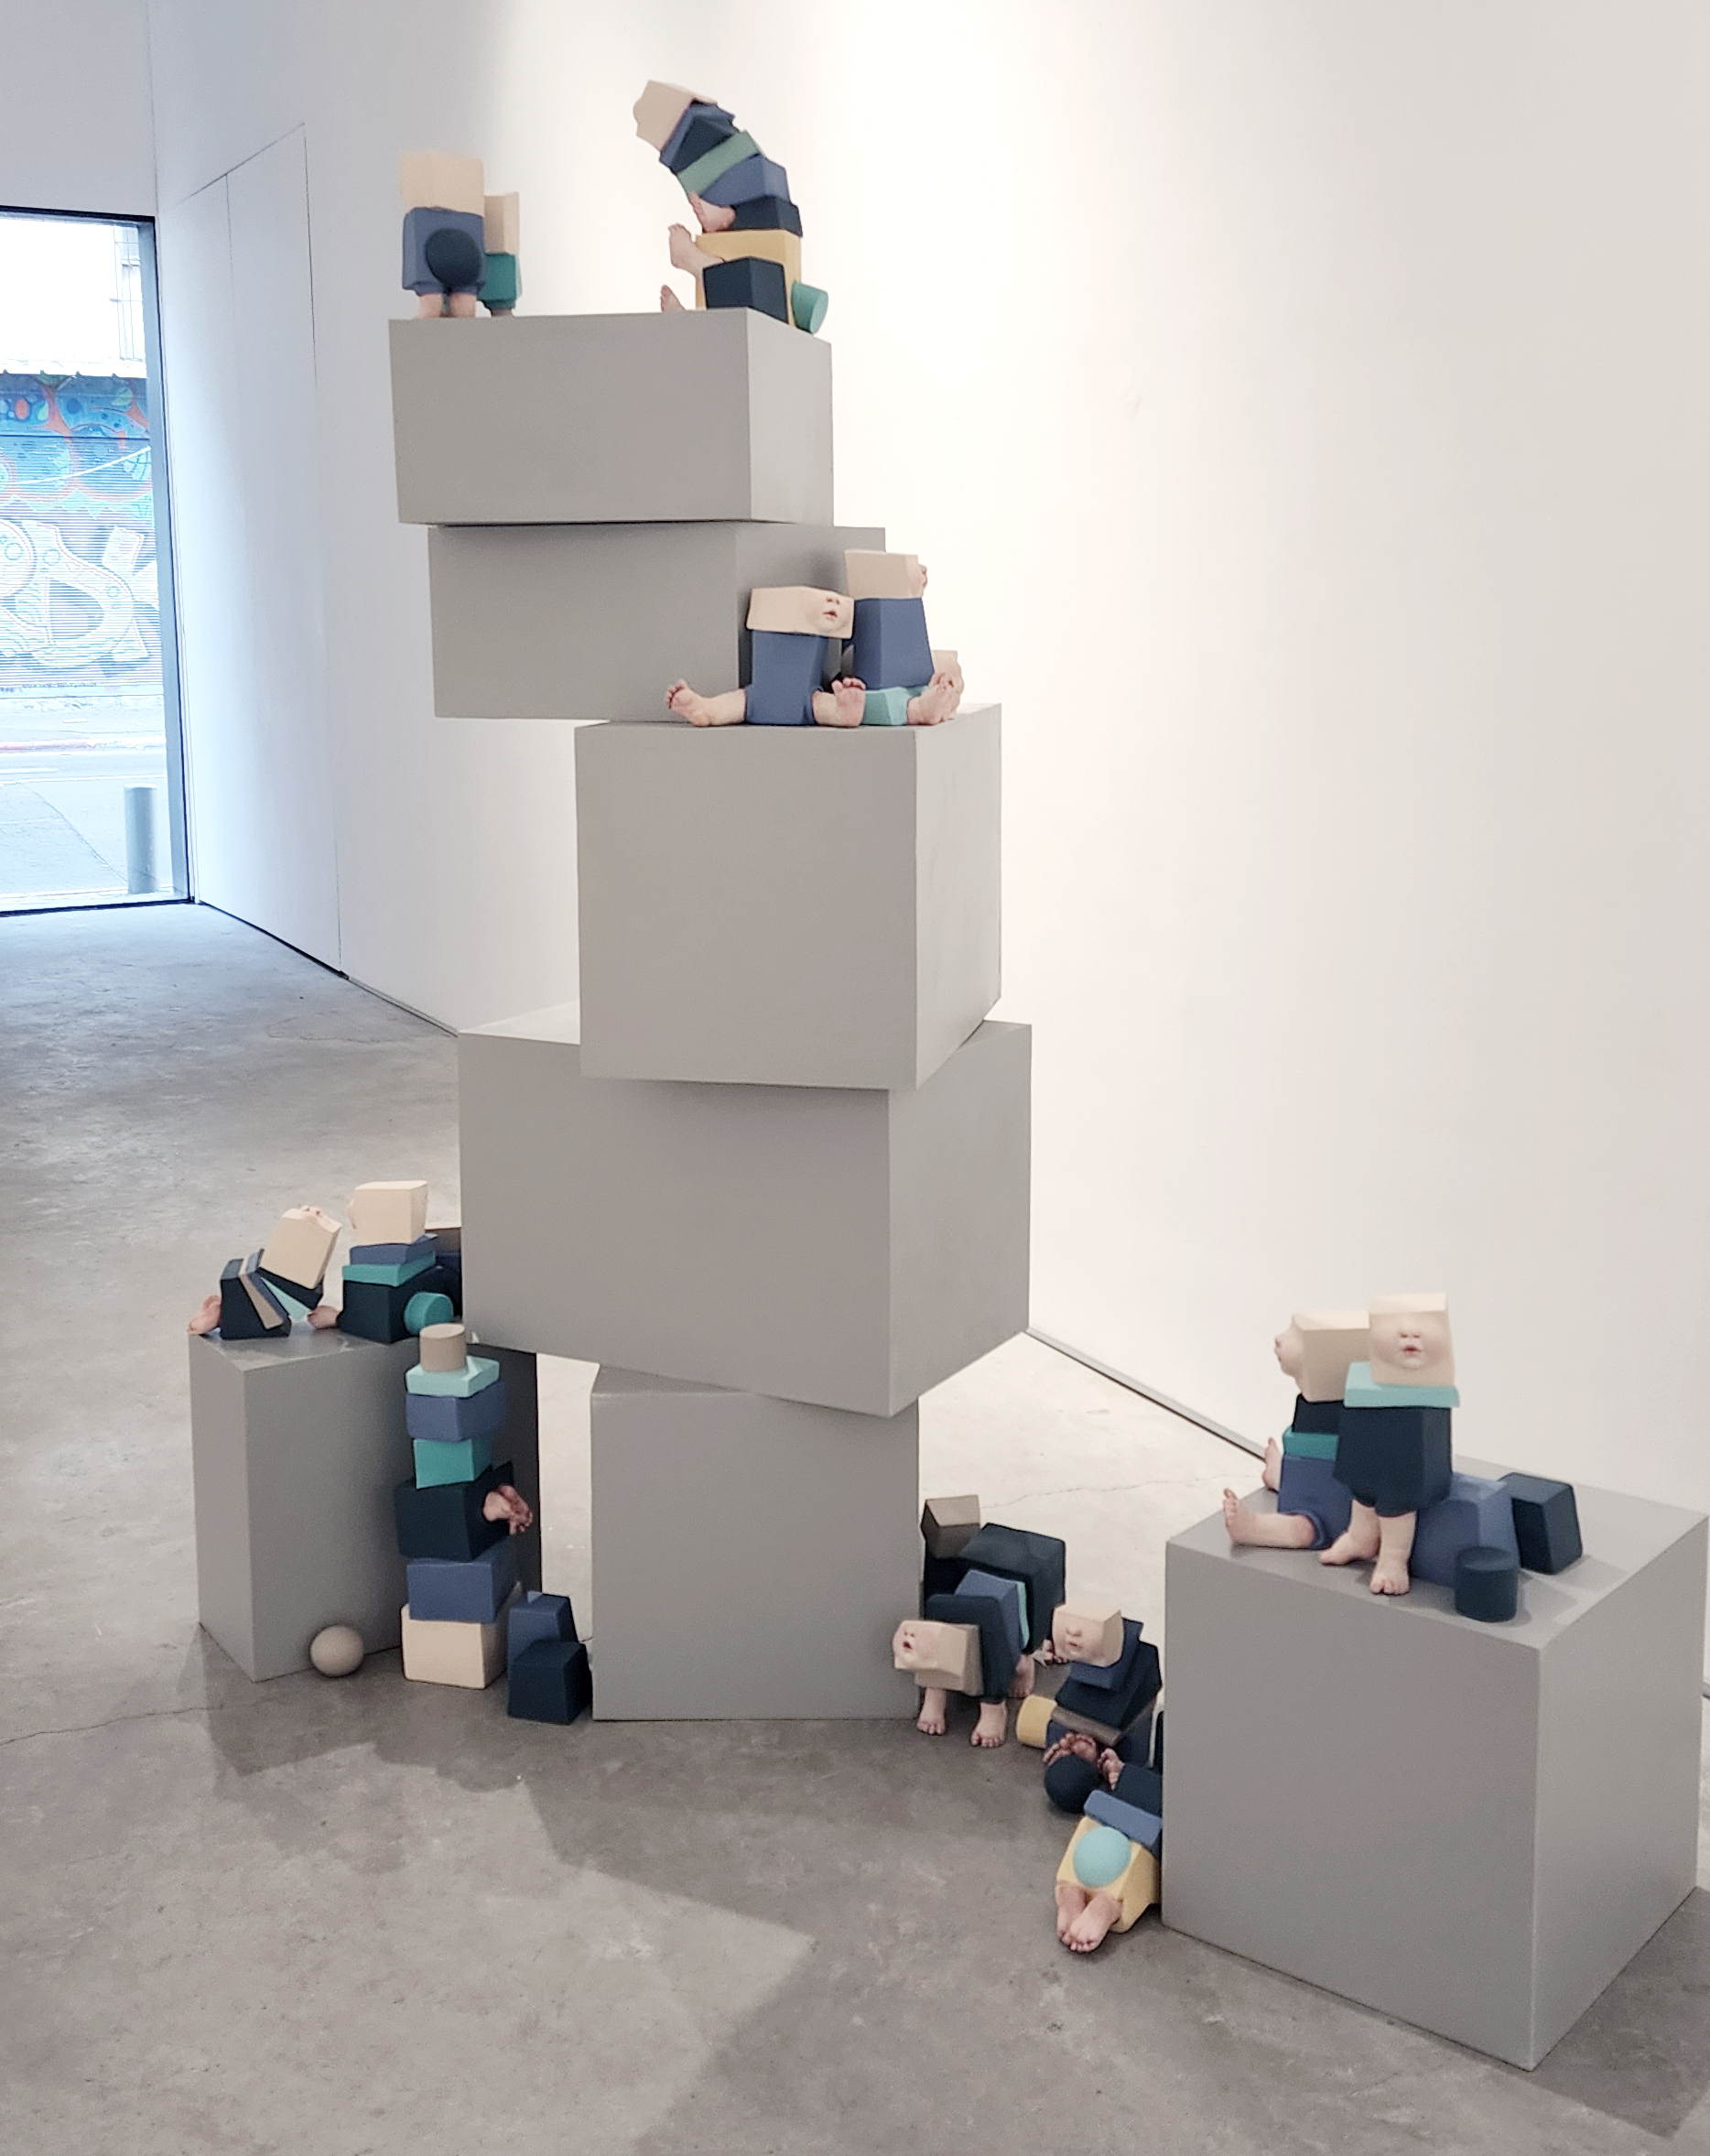 Ronit Baranga, Between Four Walls, 2022, Installation view at Braverman Gallery, Tel Aviv.